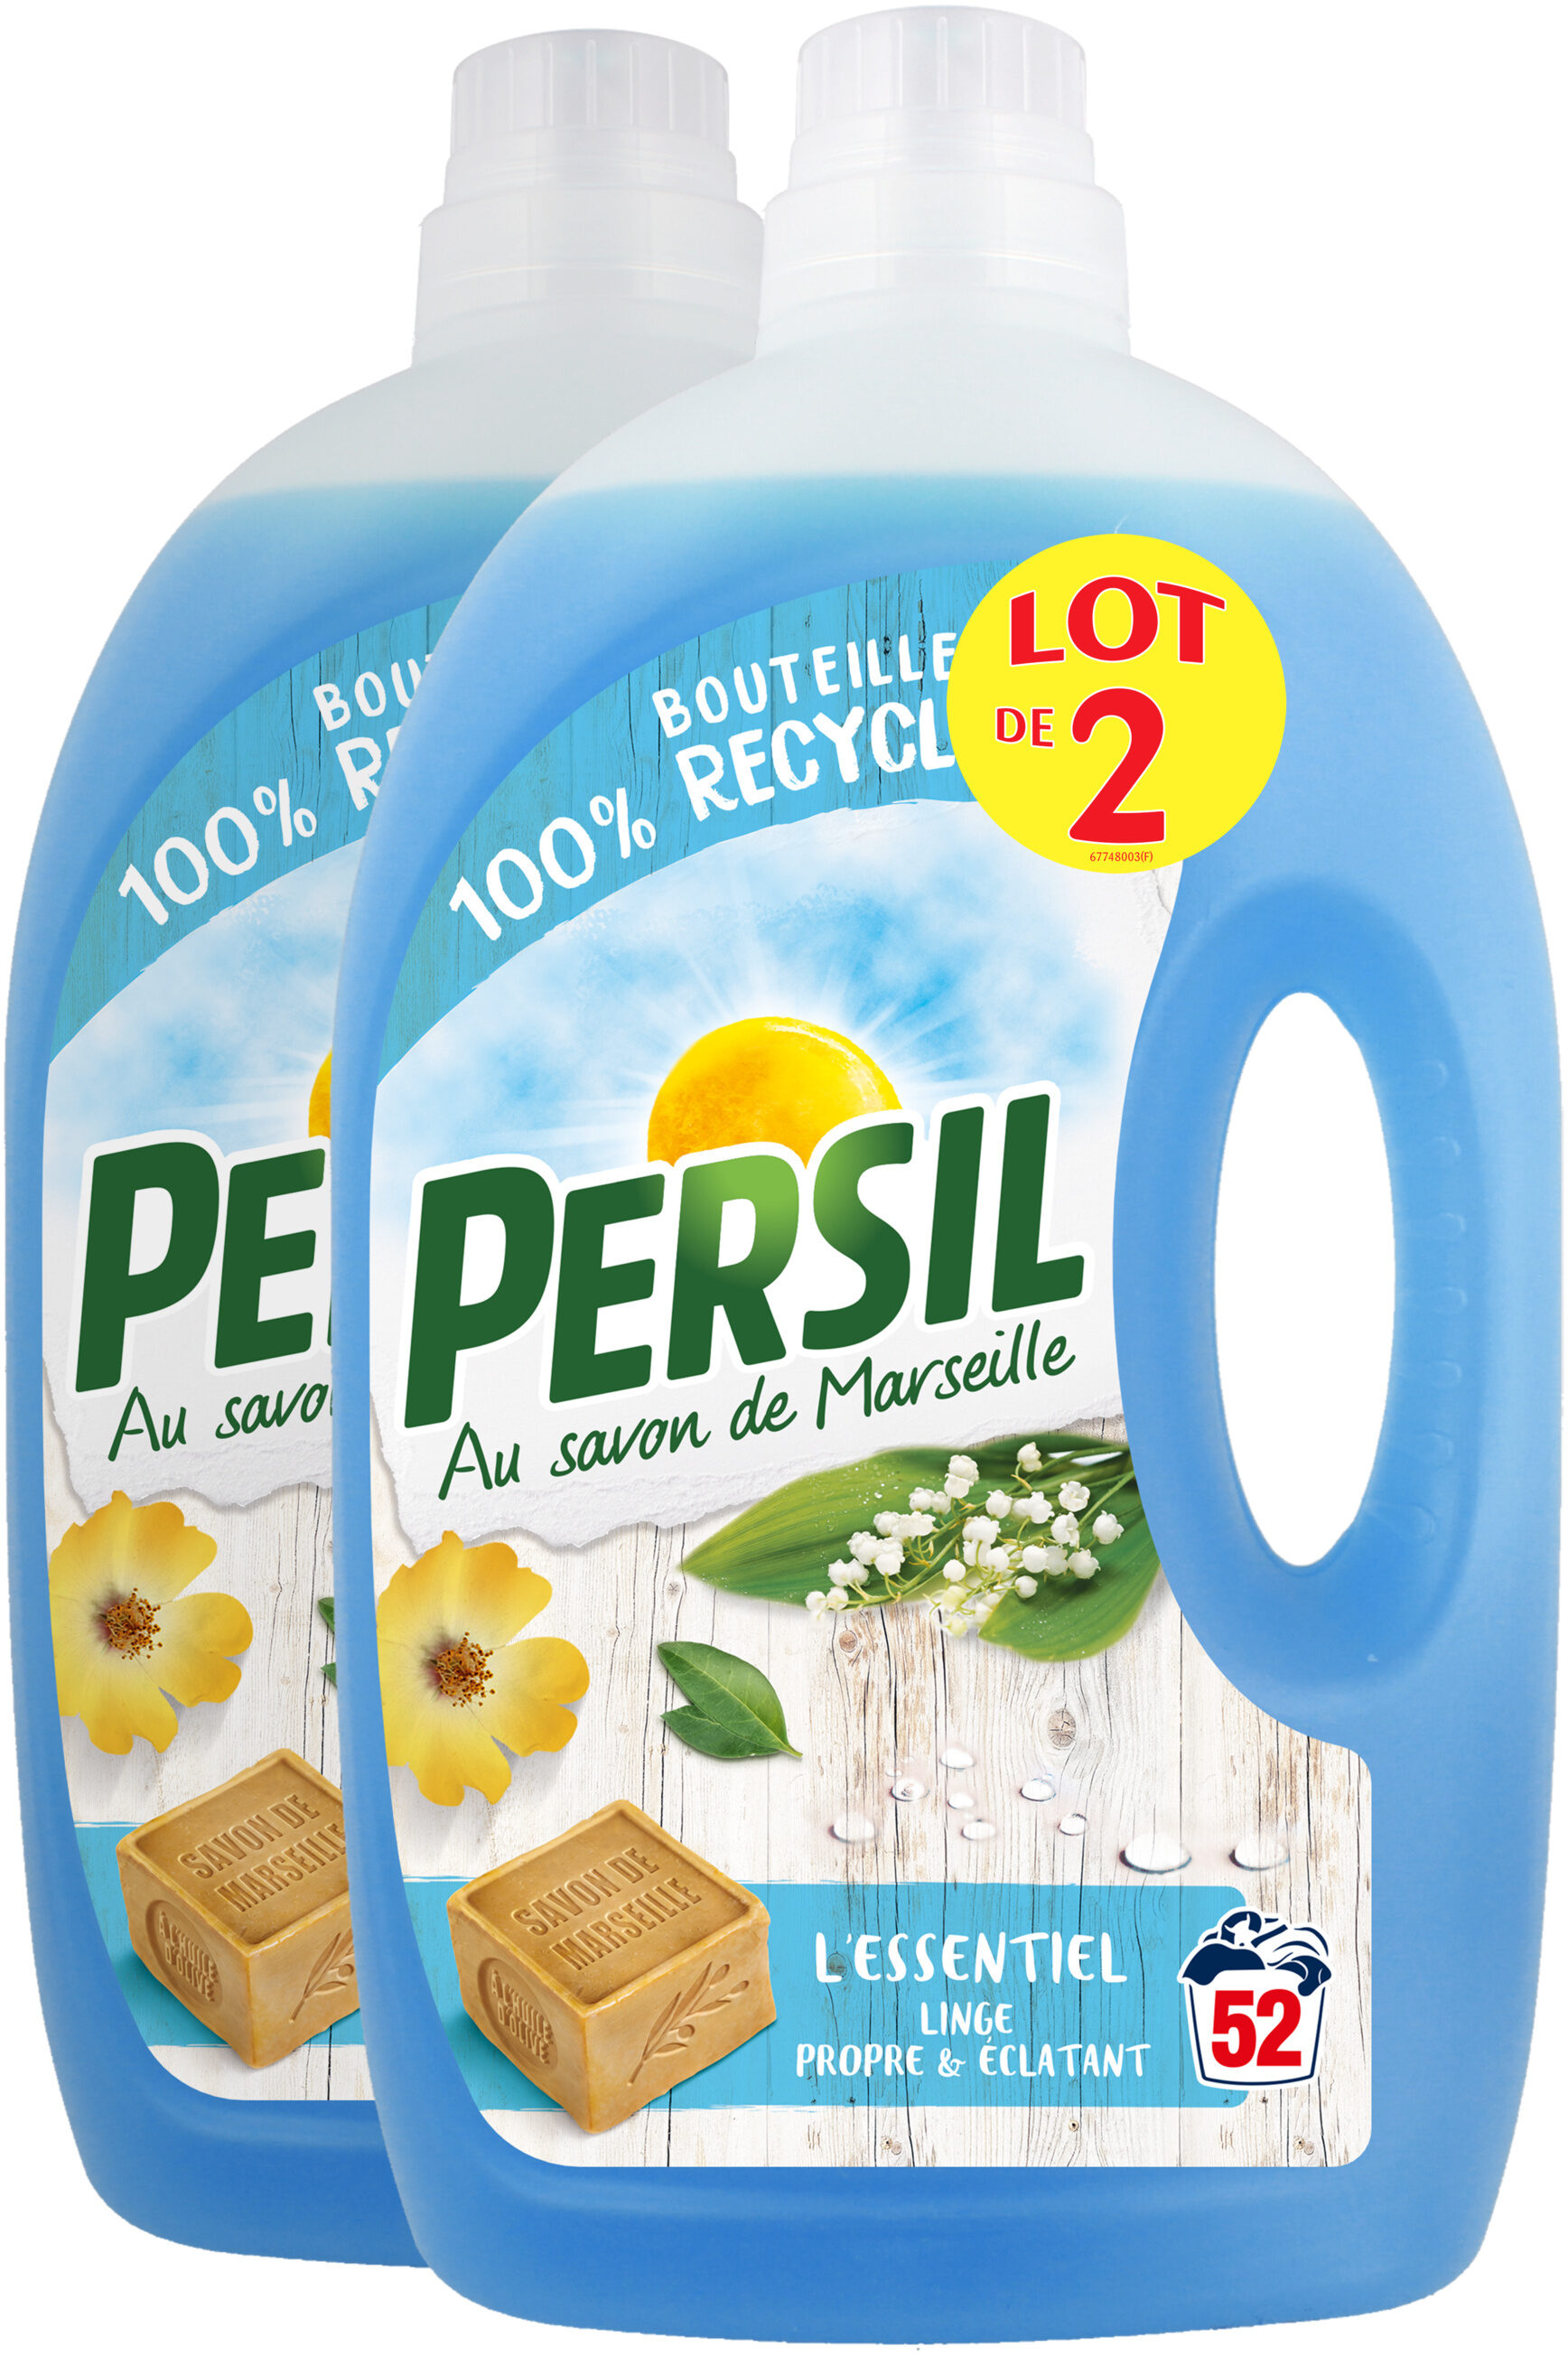 Persil Lessive Liquide l'Essentiel 2,6l 52 Lavages Lot de 2 - Produto - fr